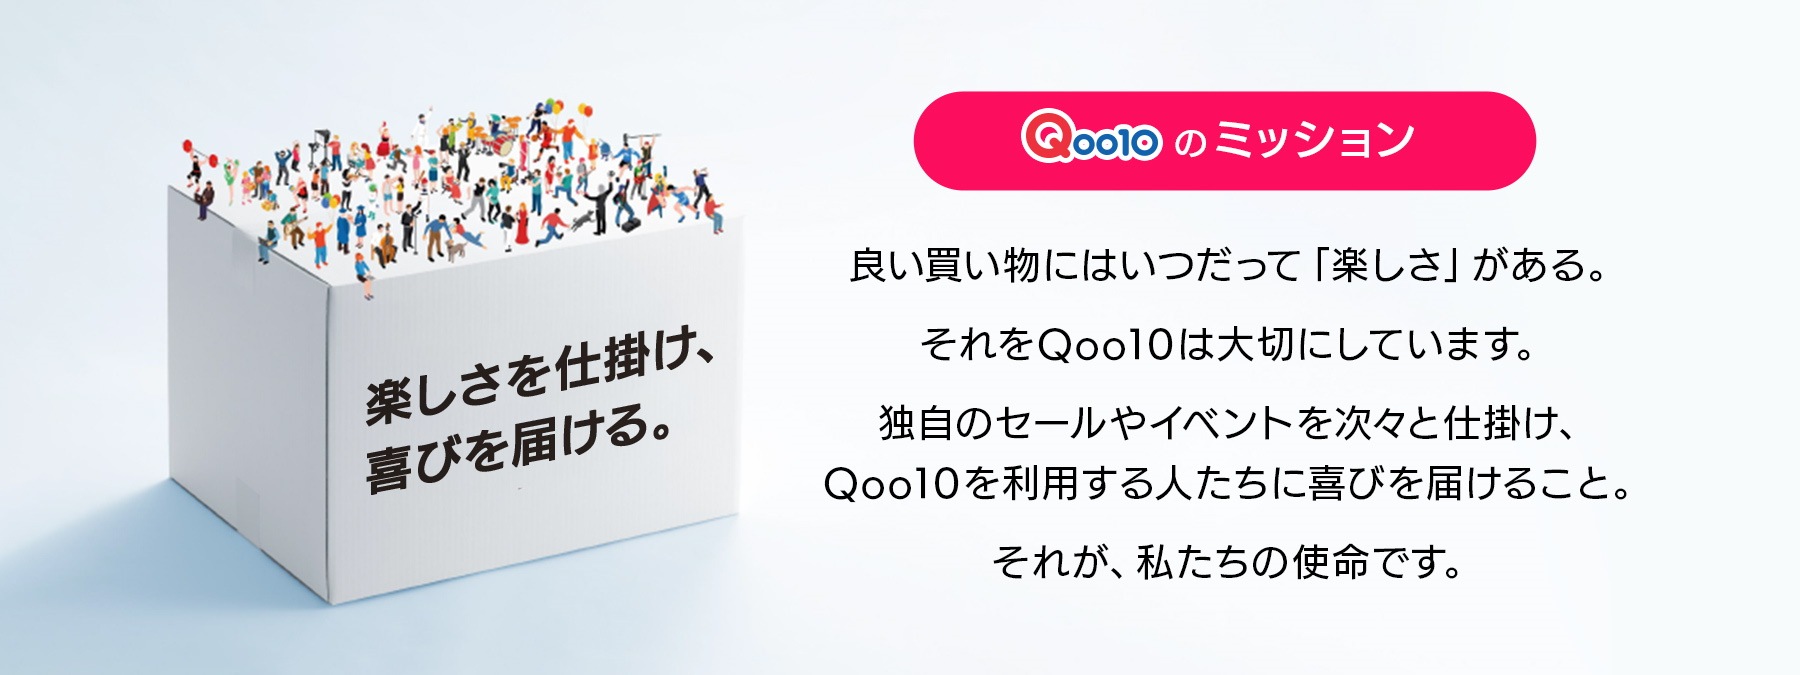 Qoo10のミッション